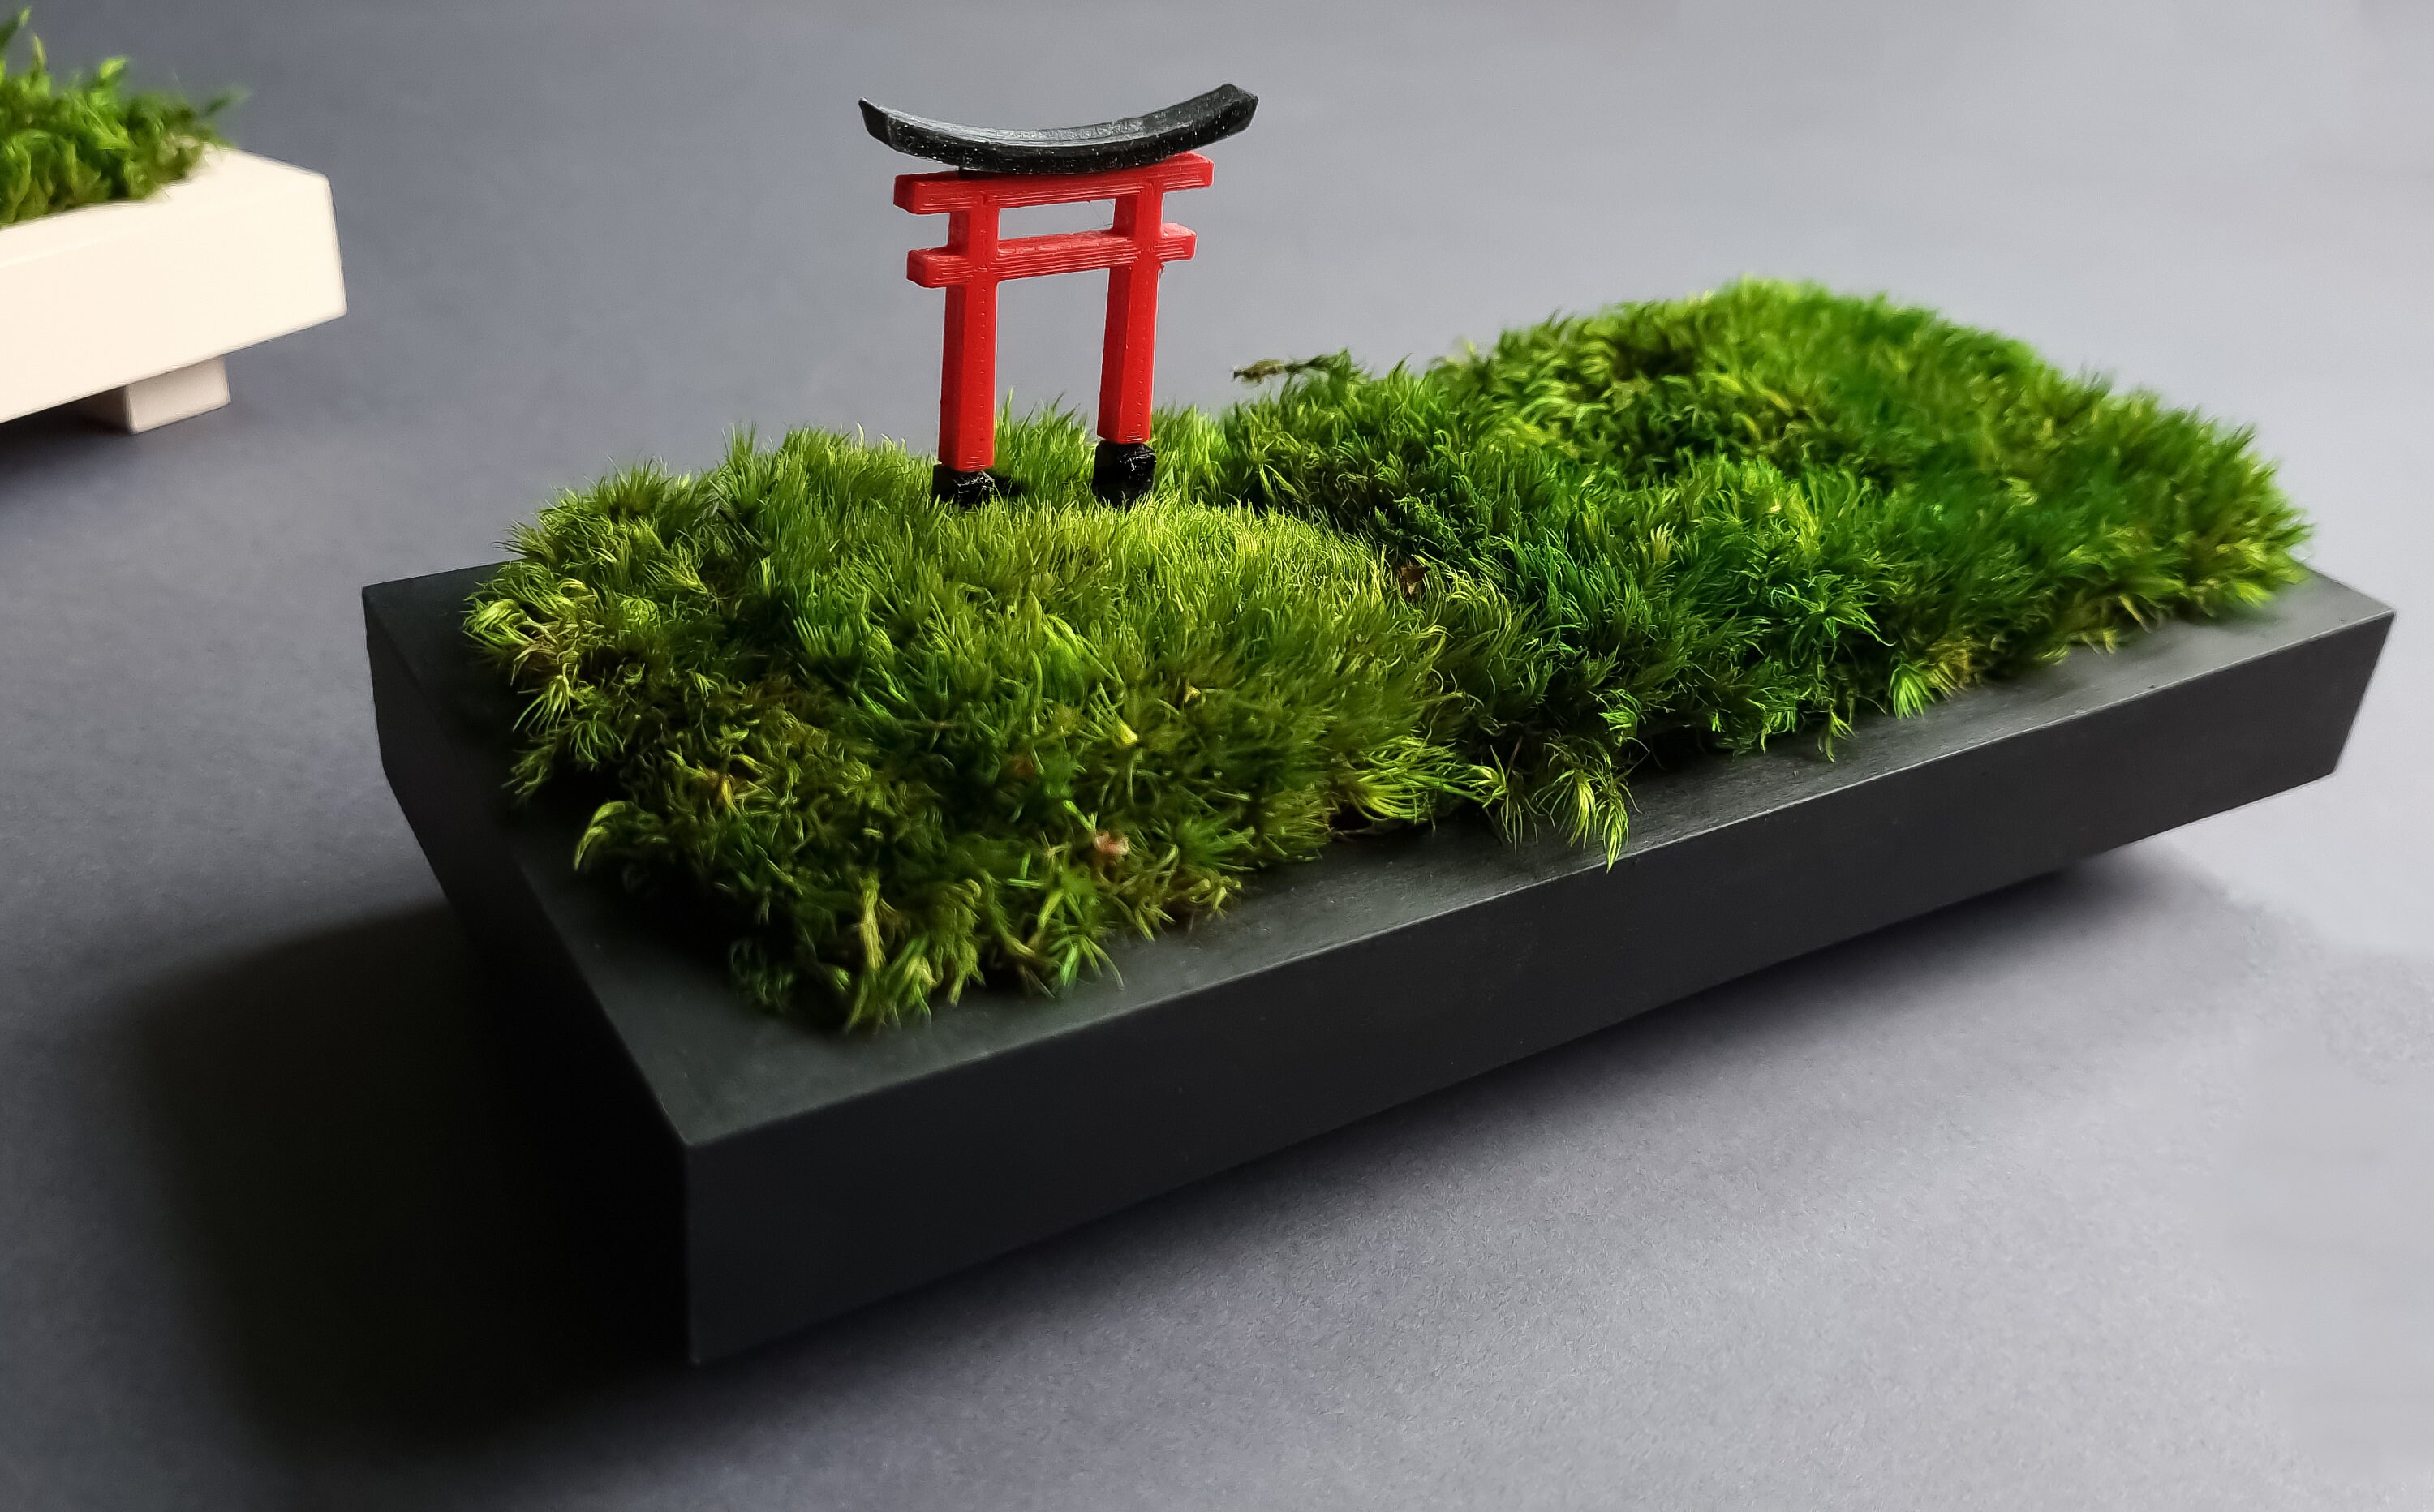 Gardening Plasticine DIY clay for perserved moss, vertical garden,  terrarium, micro landscape, 500g / 1.1lb